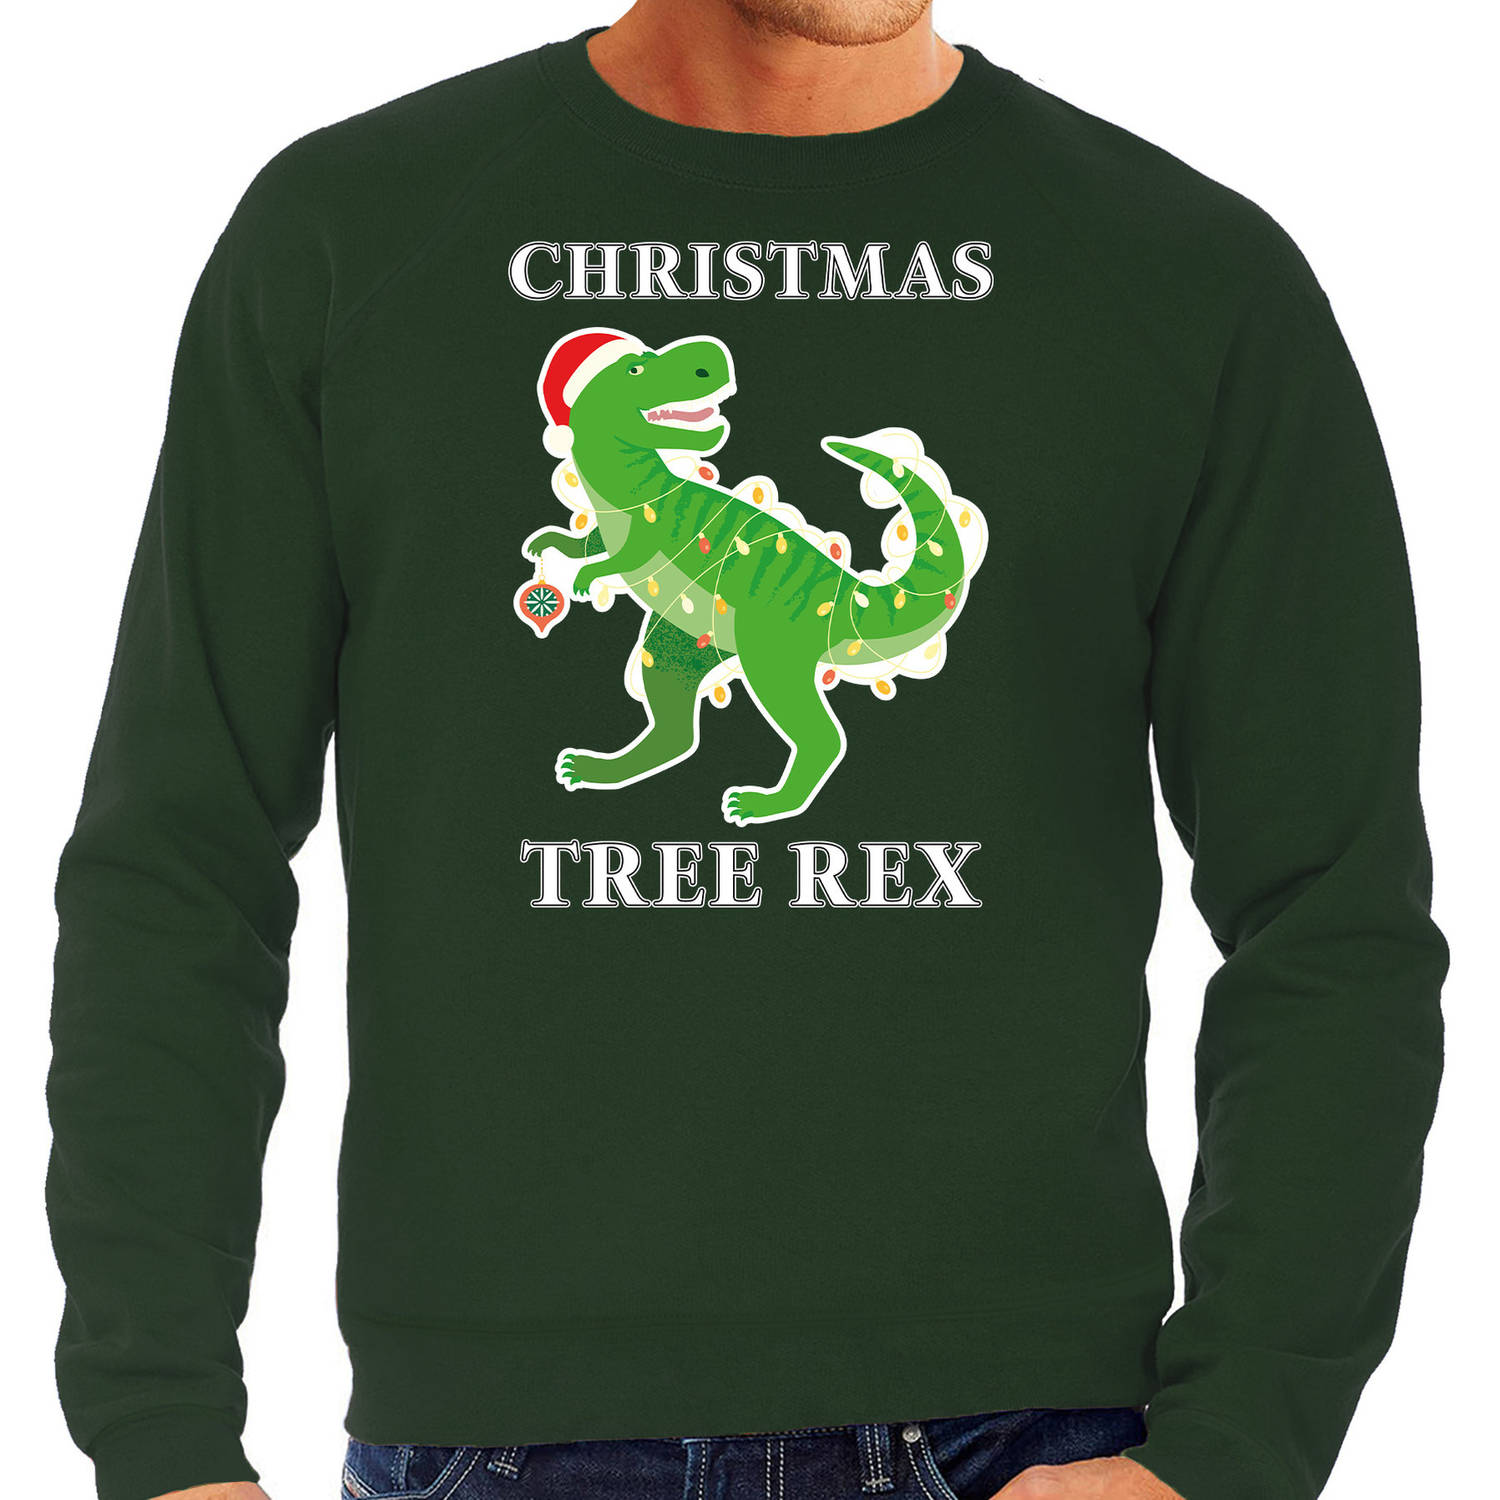 Groene Kersttrui / Kerstkleding Christmas tree rex voor heren XL - kerst truien